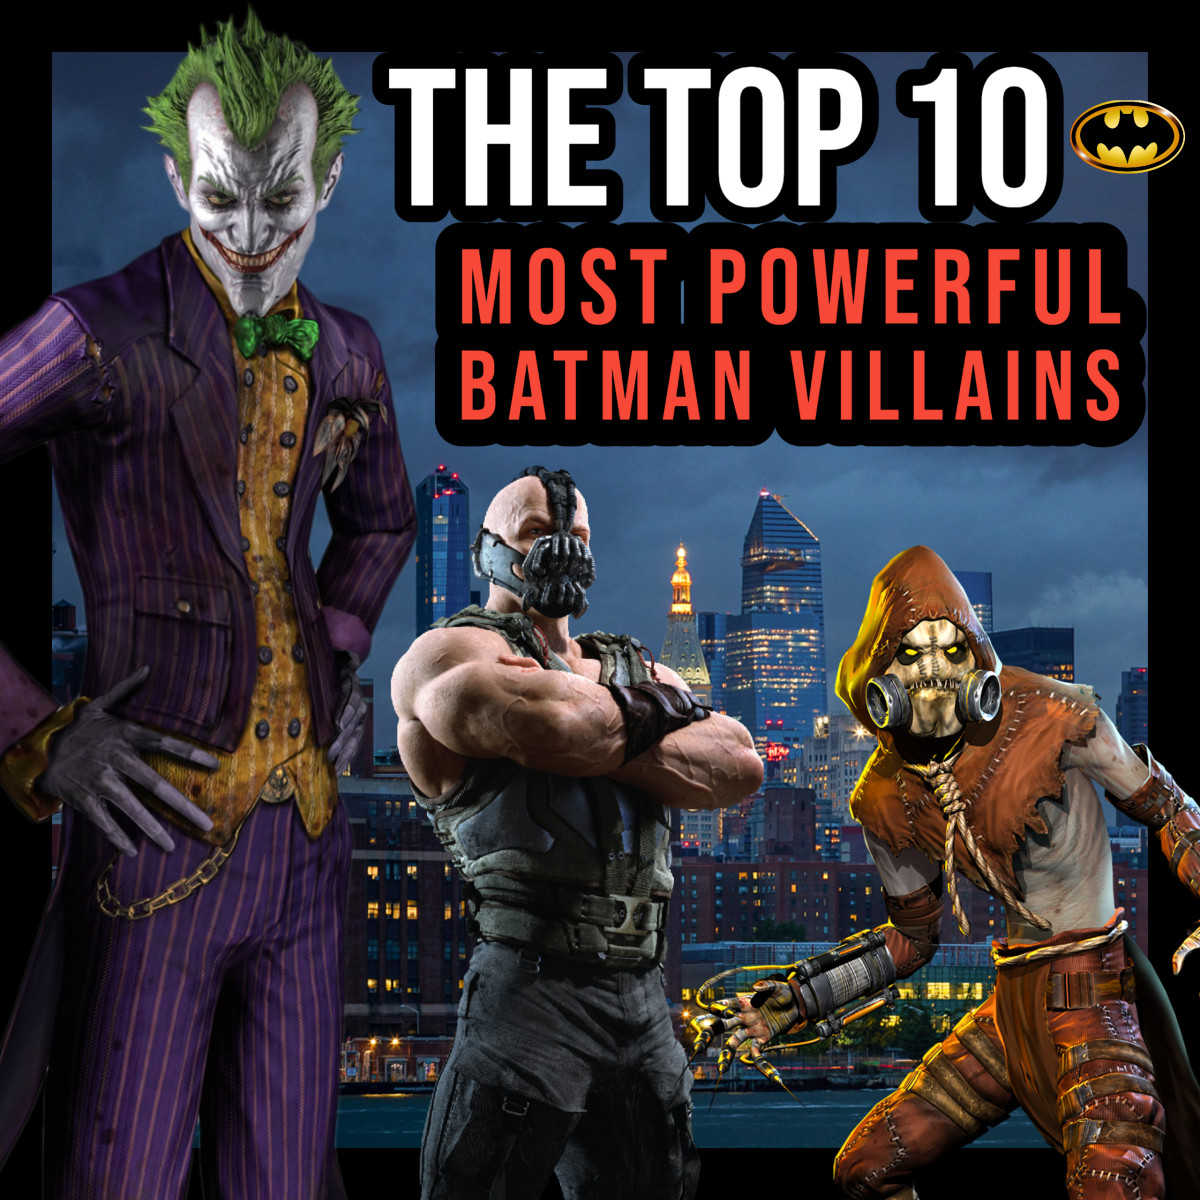 The Top 10 Most Powerful Batman Villains